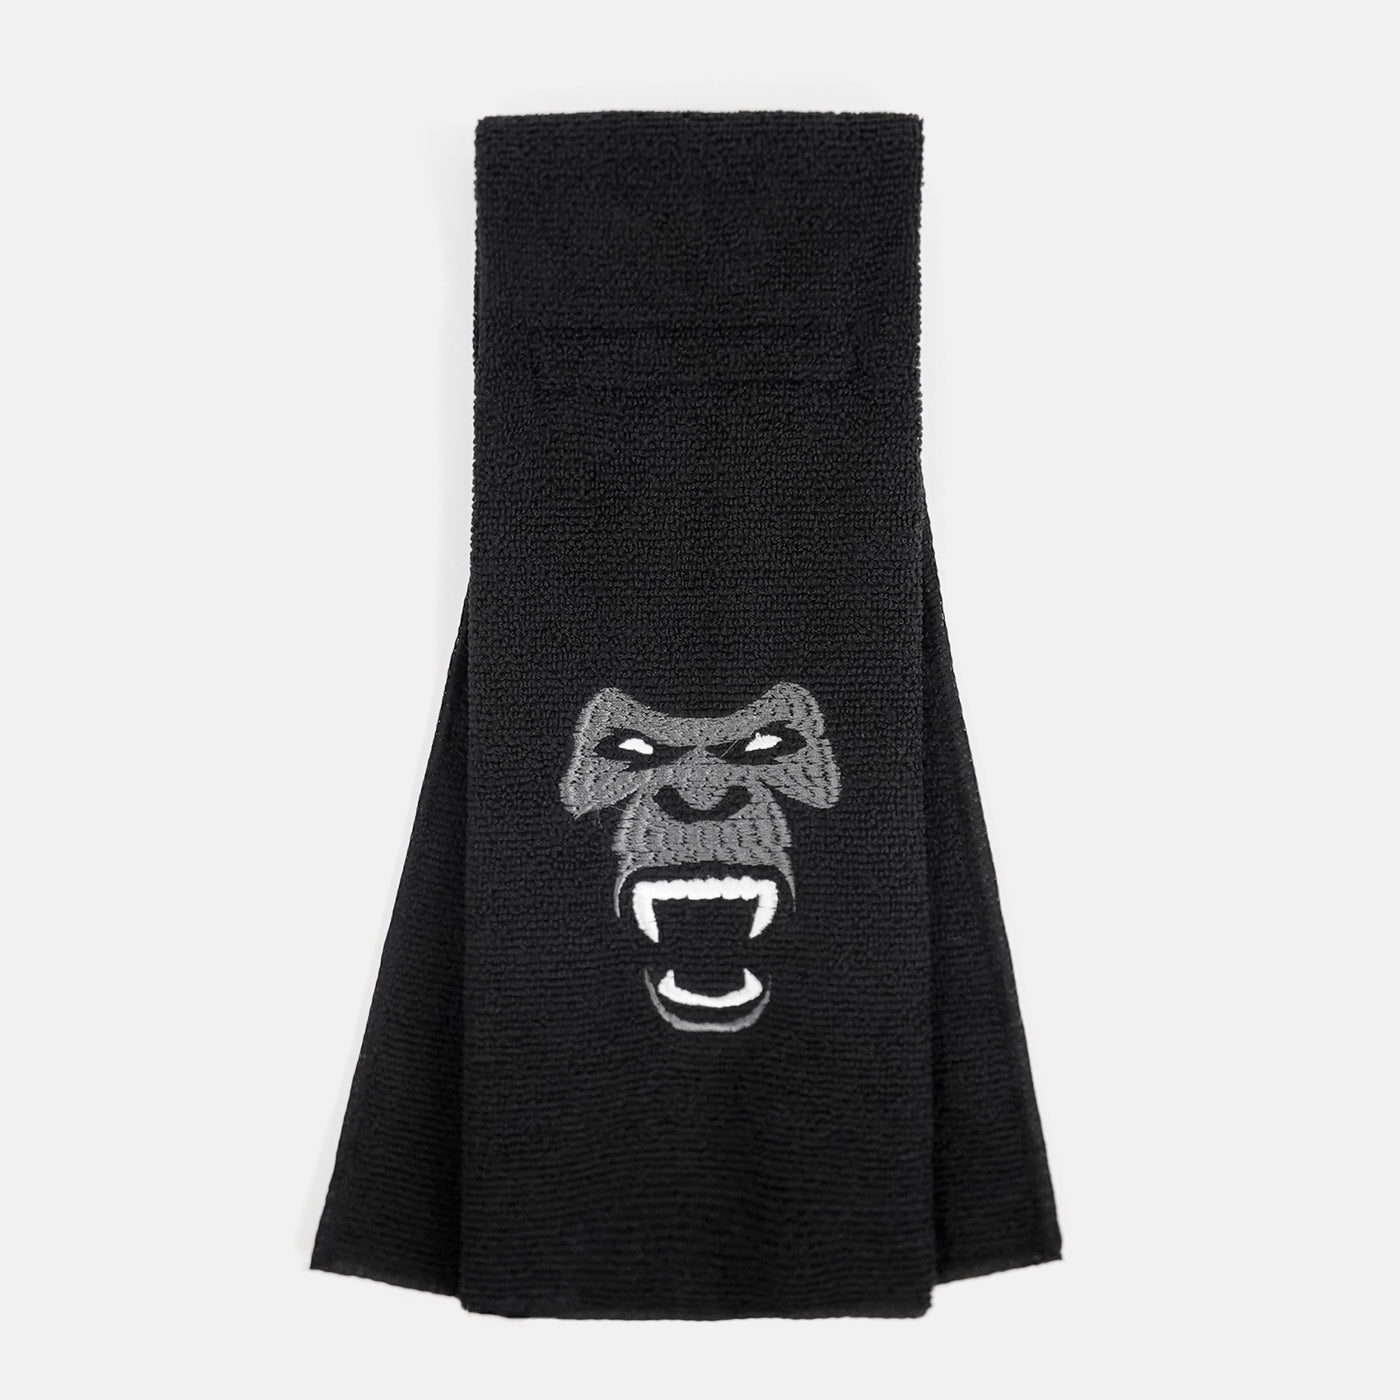 Gorilla Face Football Towel